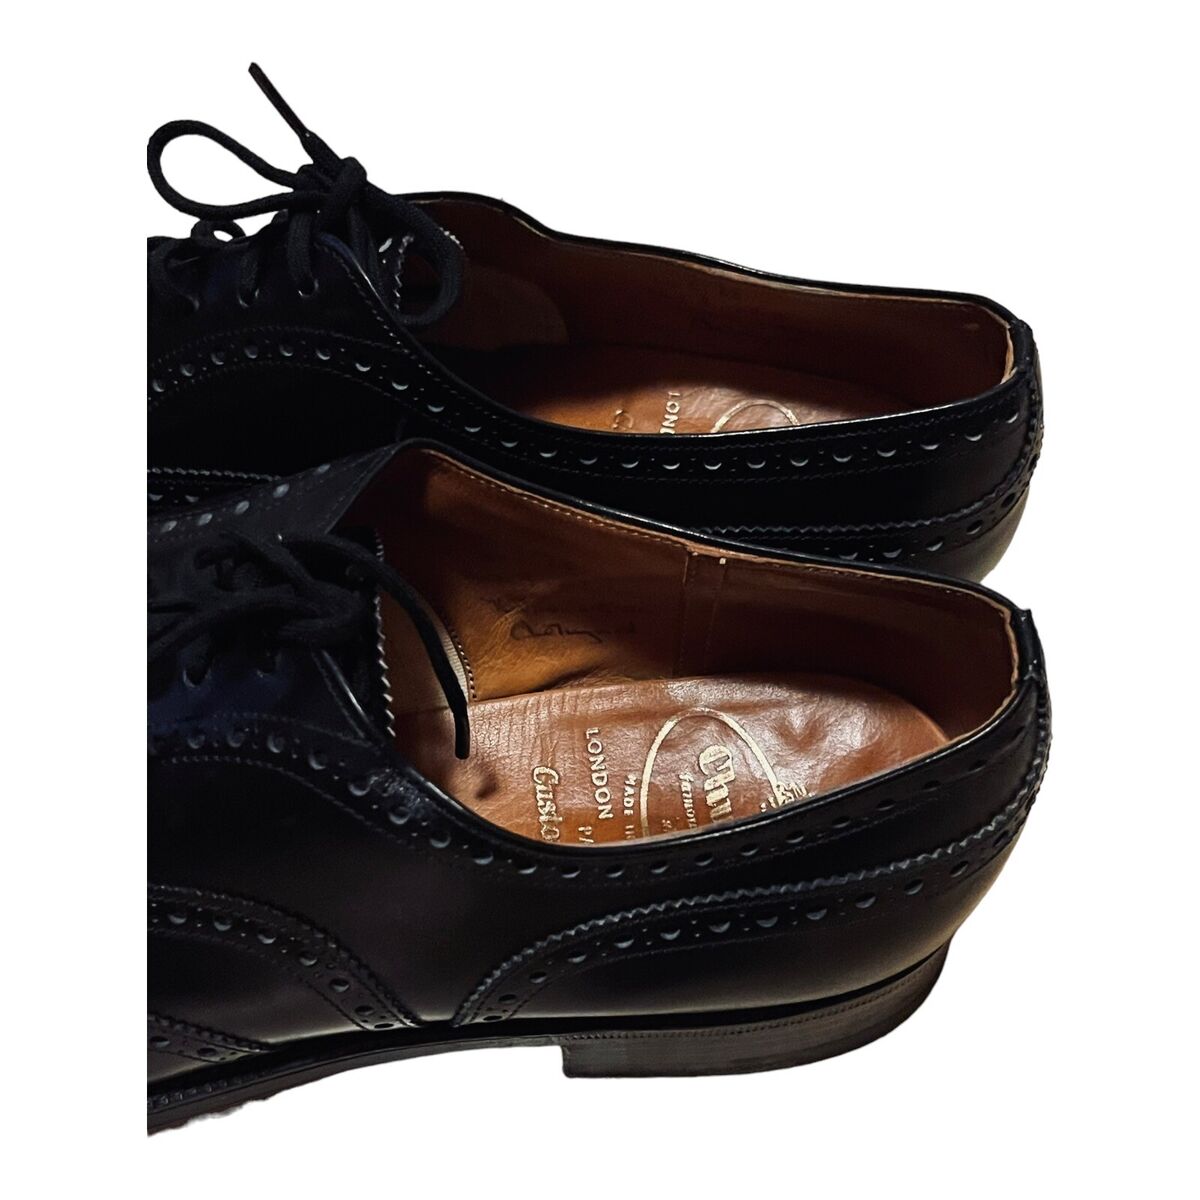 Mens Church's Shoes Custom Grade Chetwynd Brogue Black Oxford Wing Tip